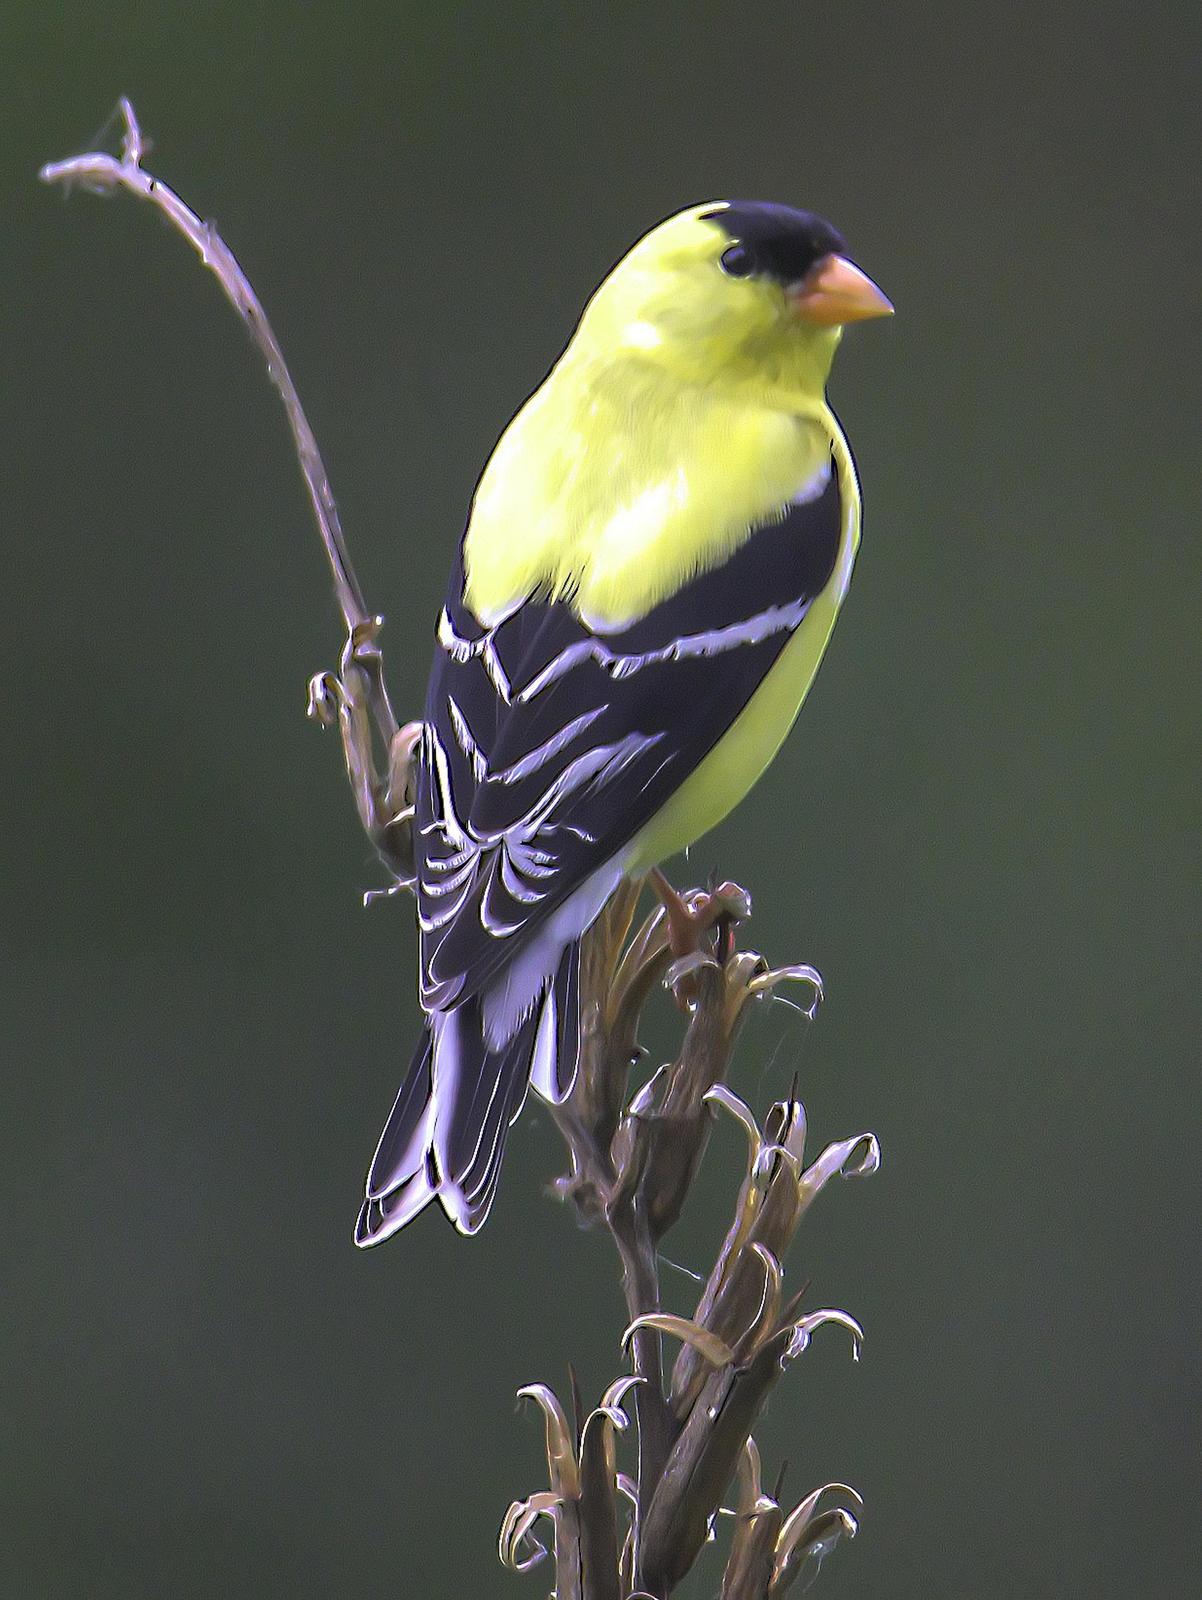 American Goldfinch Photo by Dan Tallman